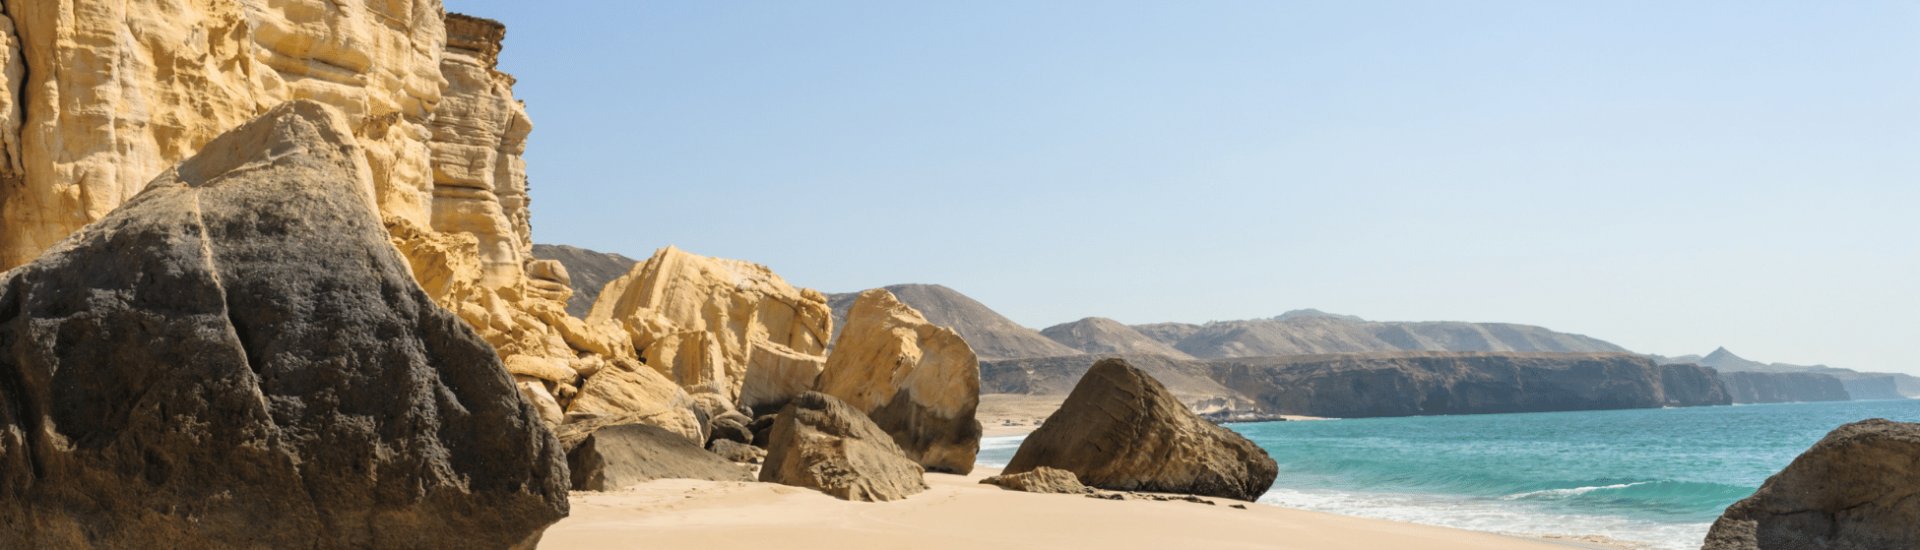 Oman-Beach-Hero